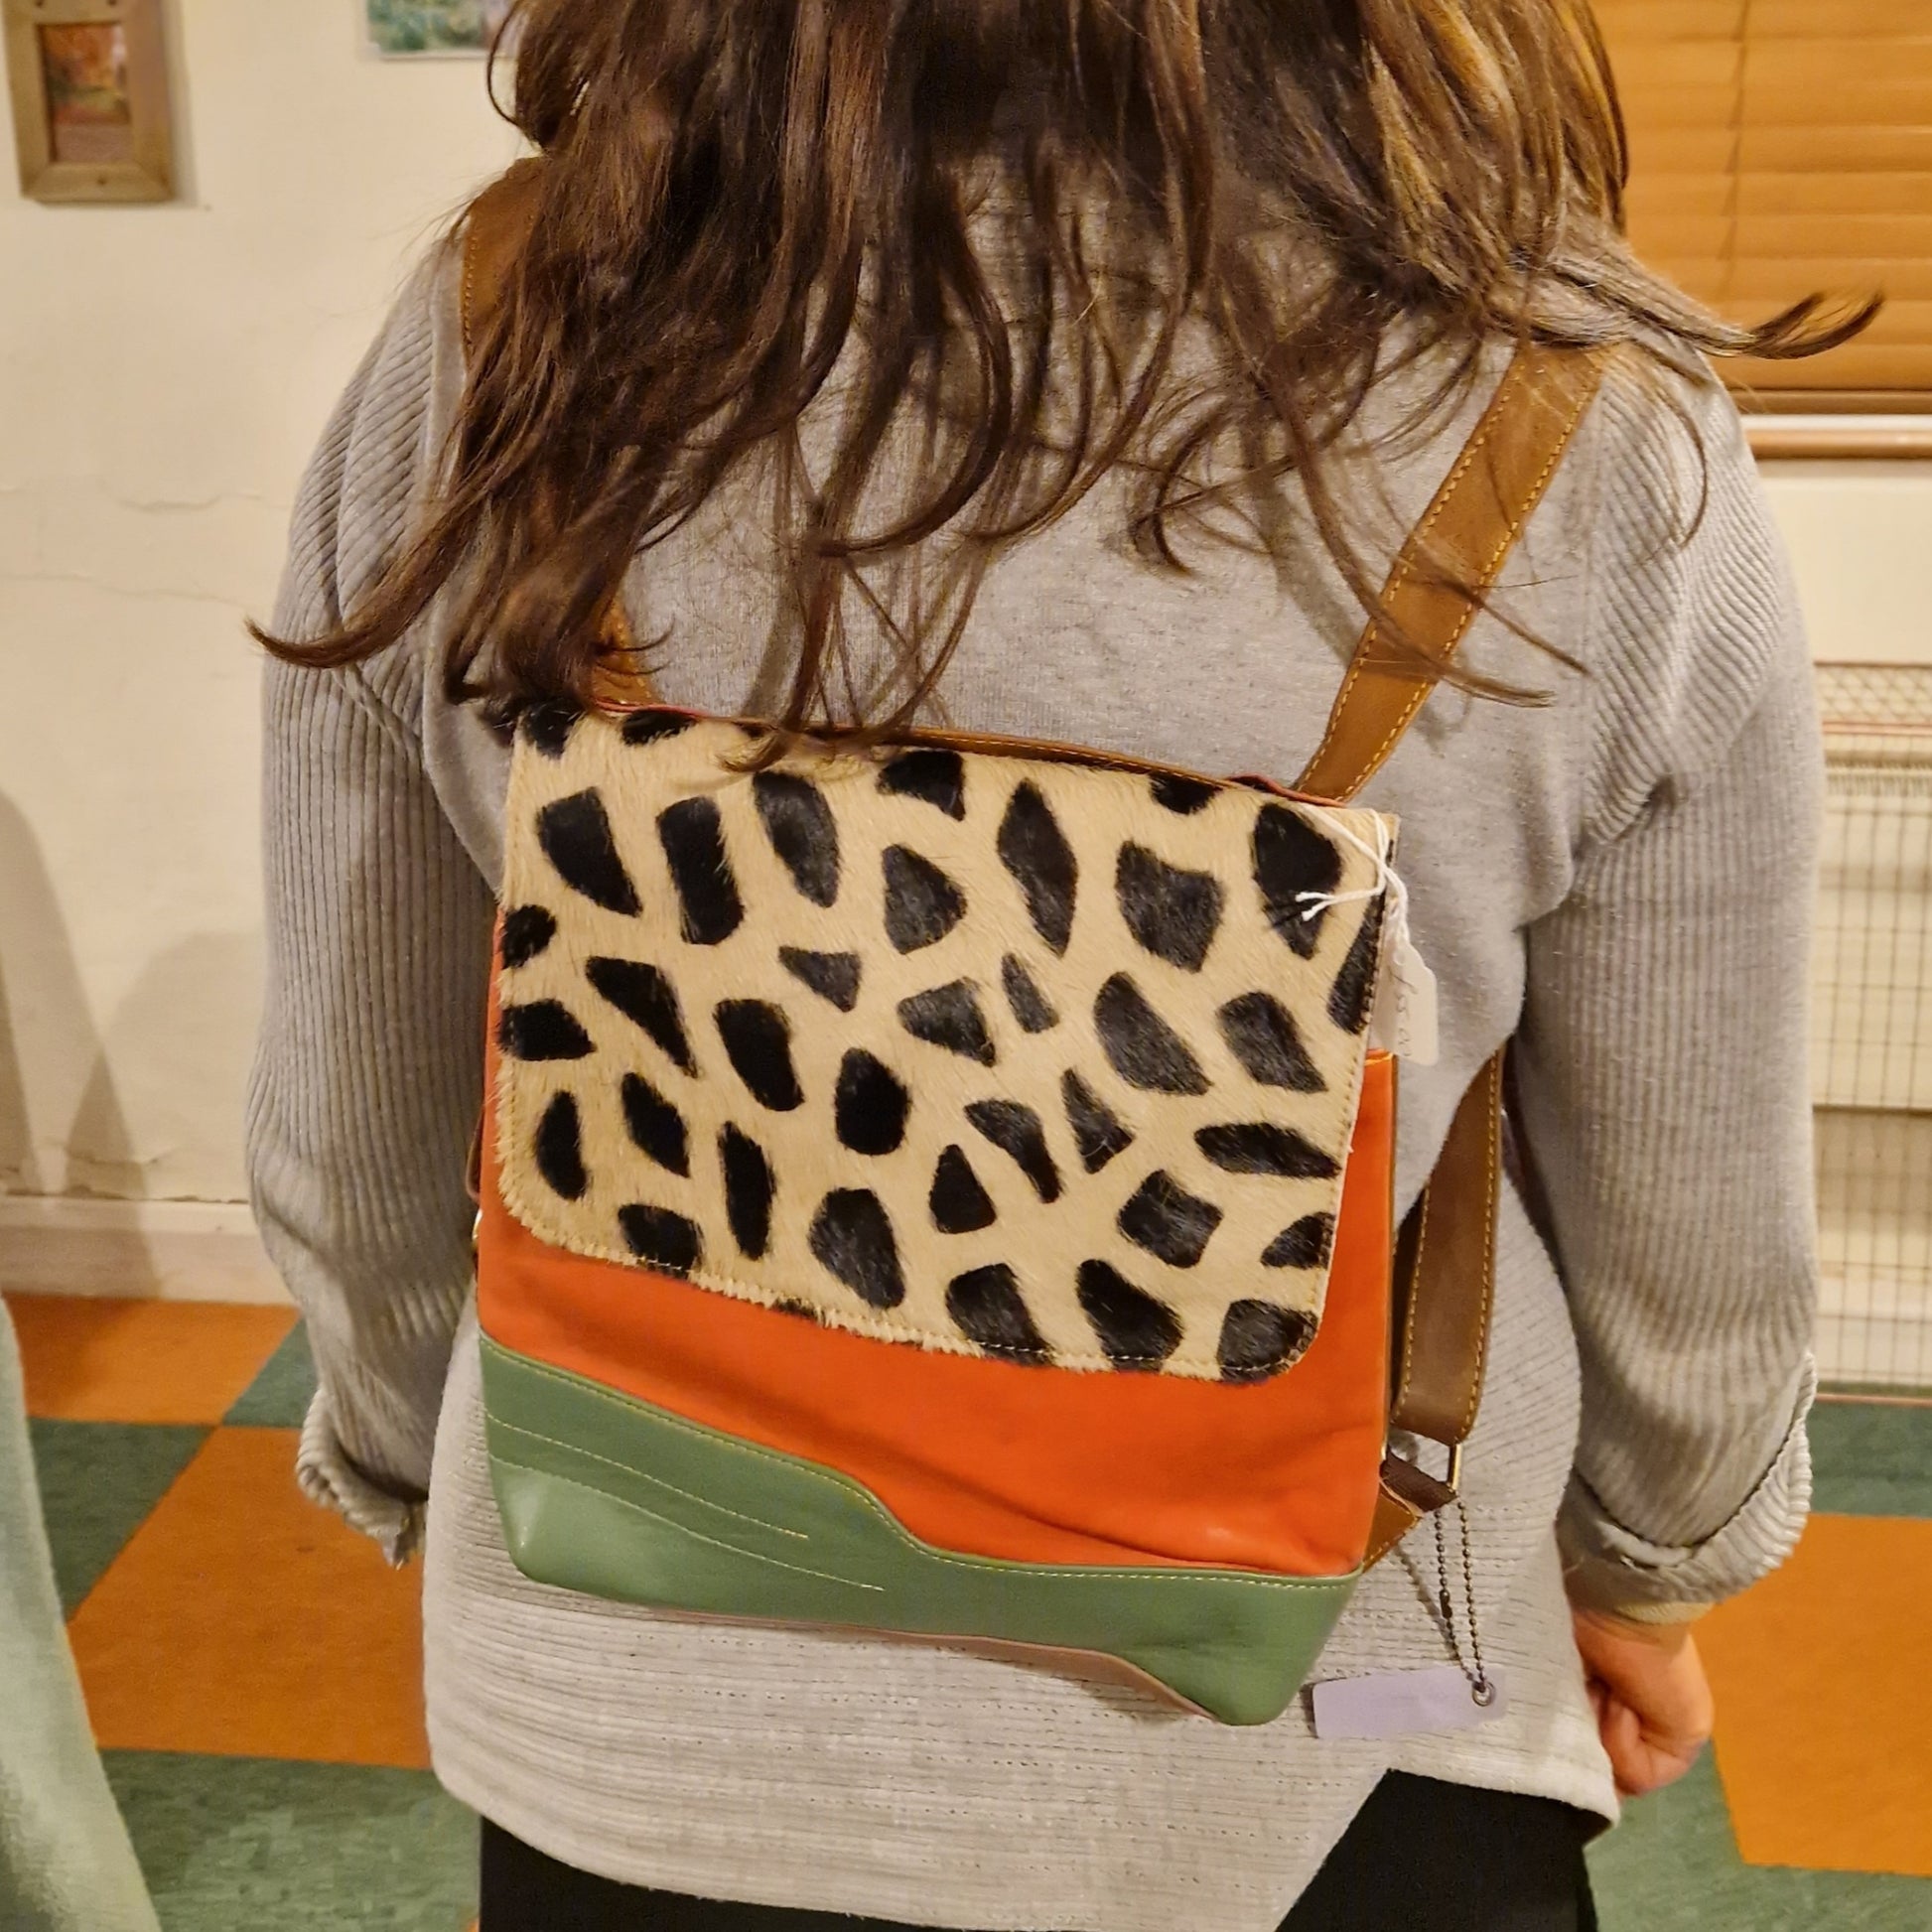 Orange and Green Leather bag with a stylish giraffe print panel.